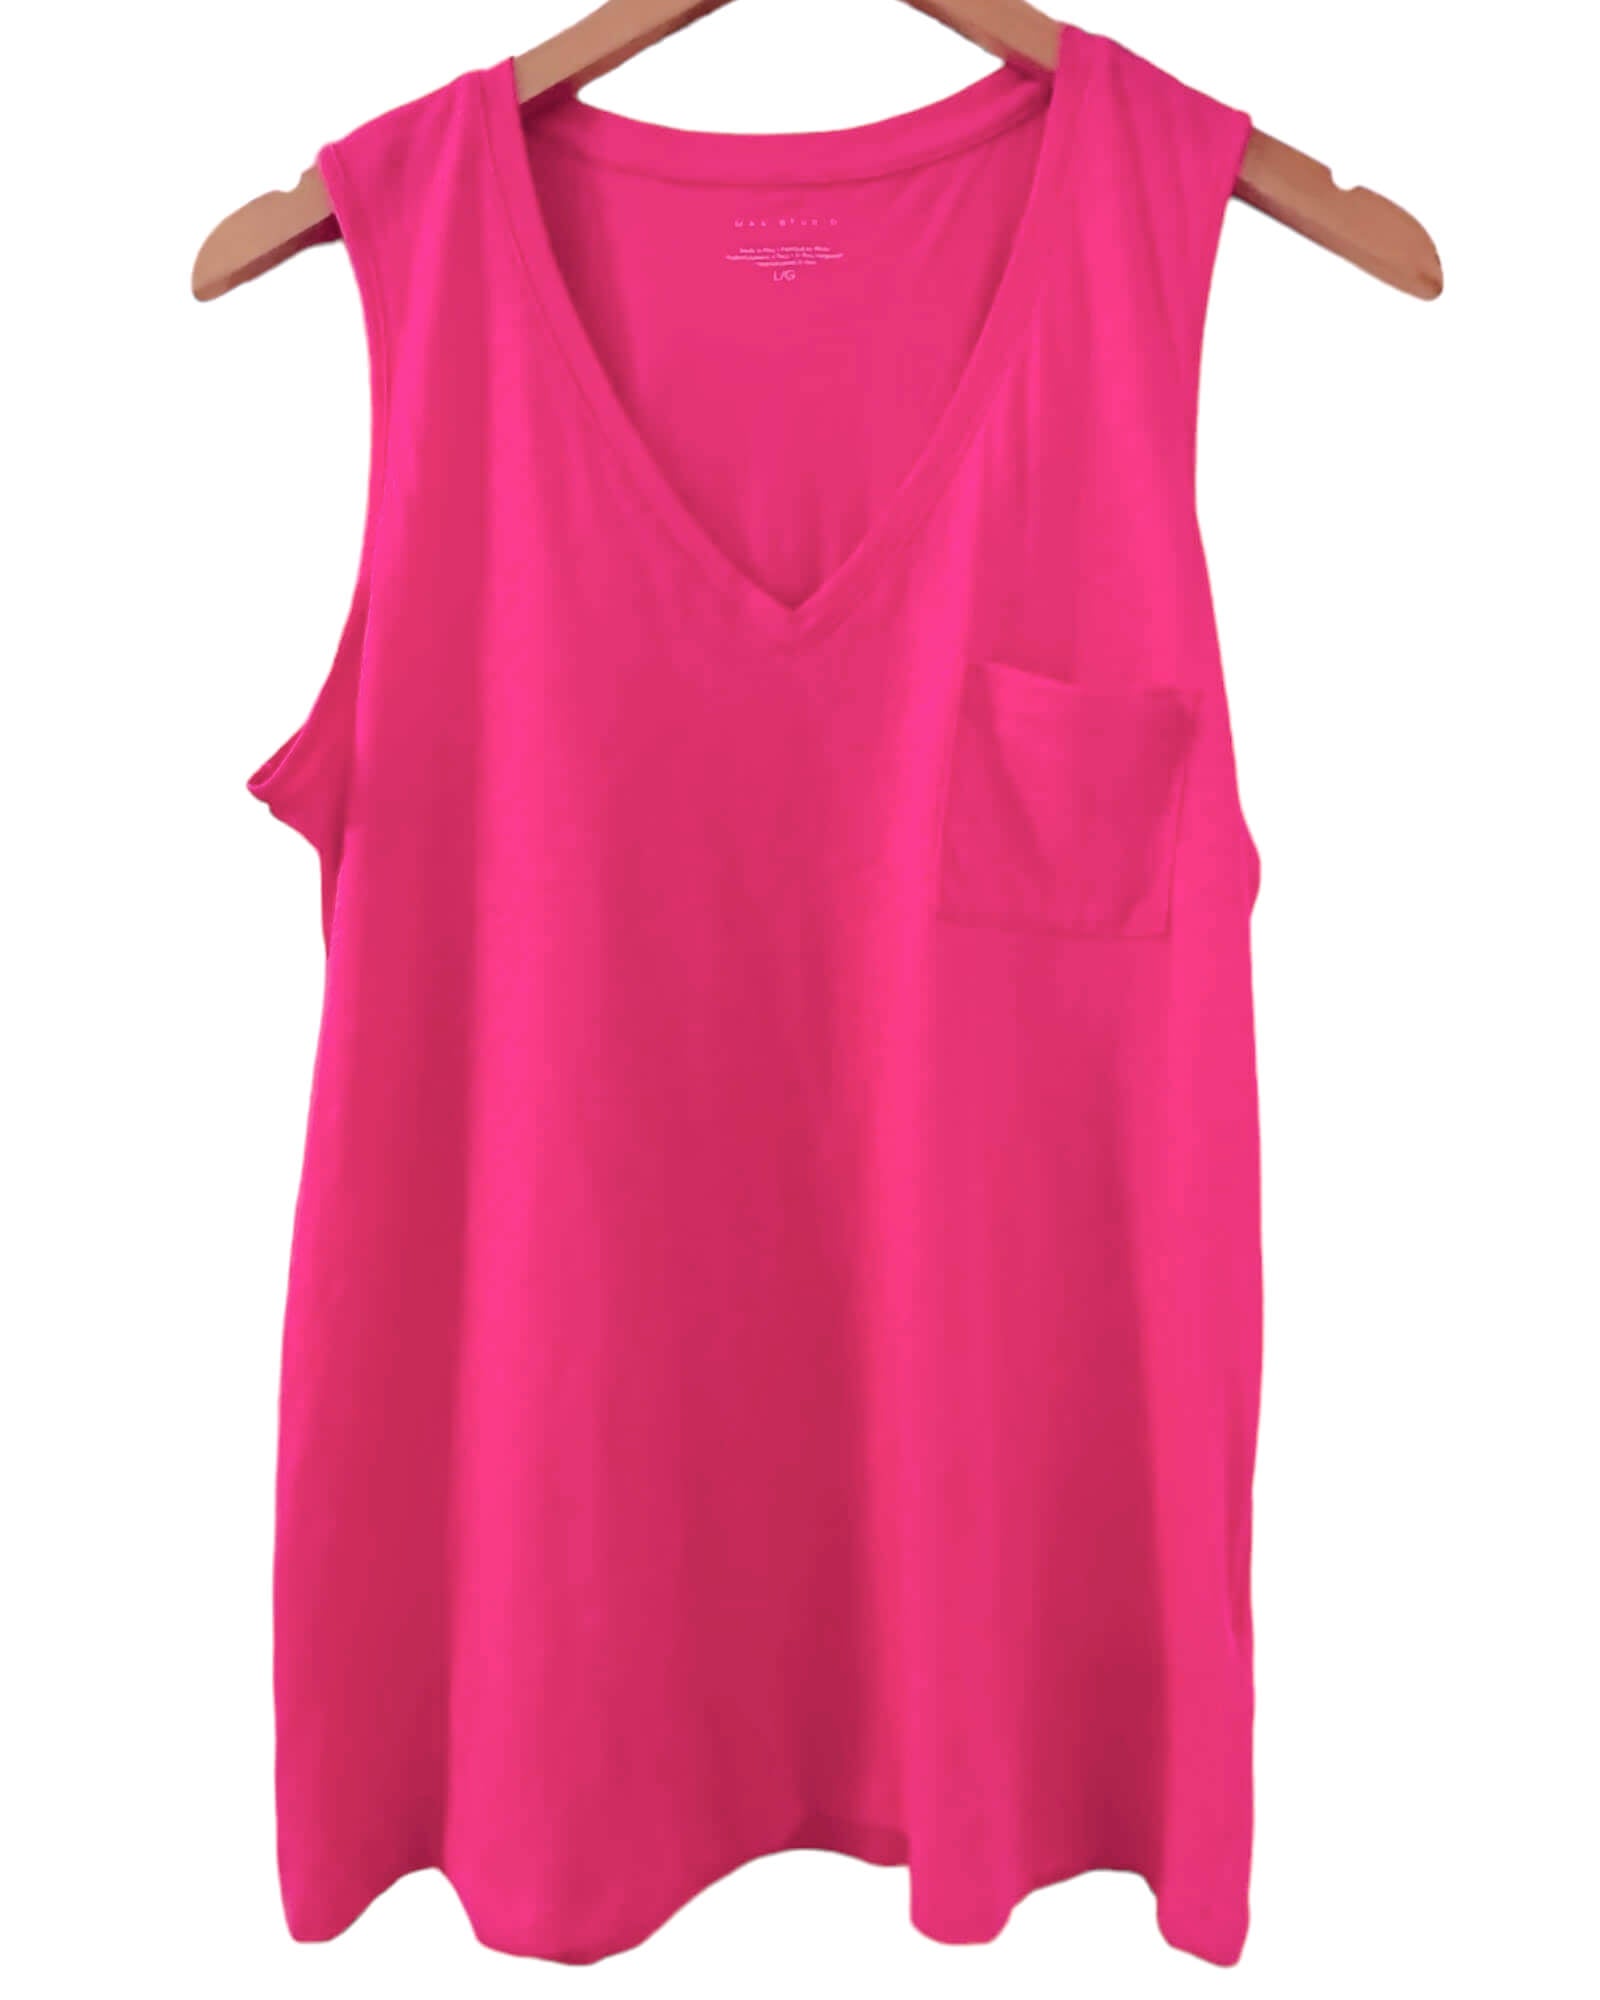 Bright Spring MAX STUDIO azalea pink sleeveless v-neck pocket tee t-shirt